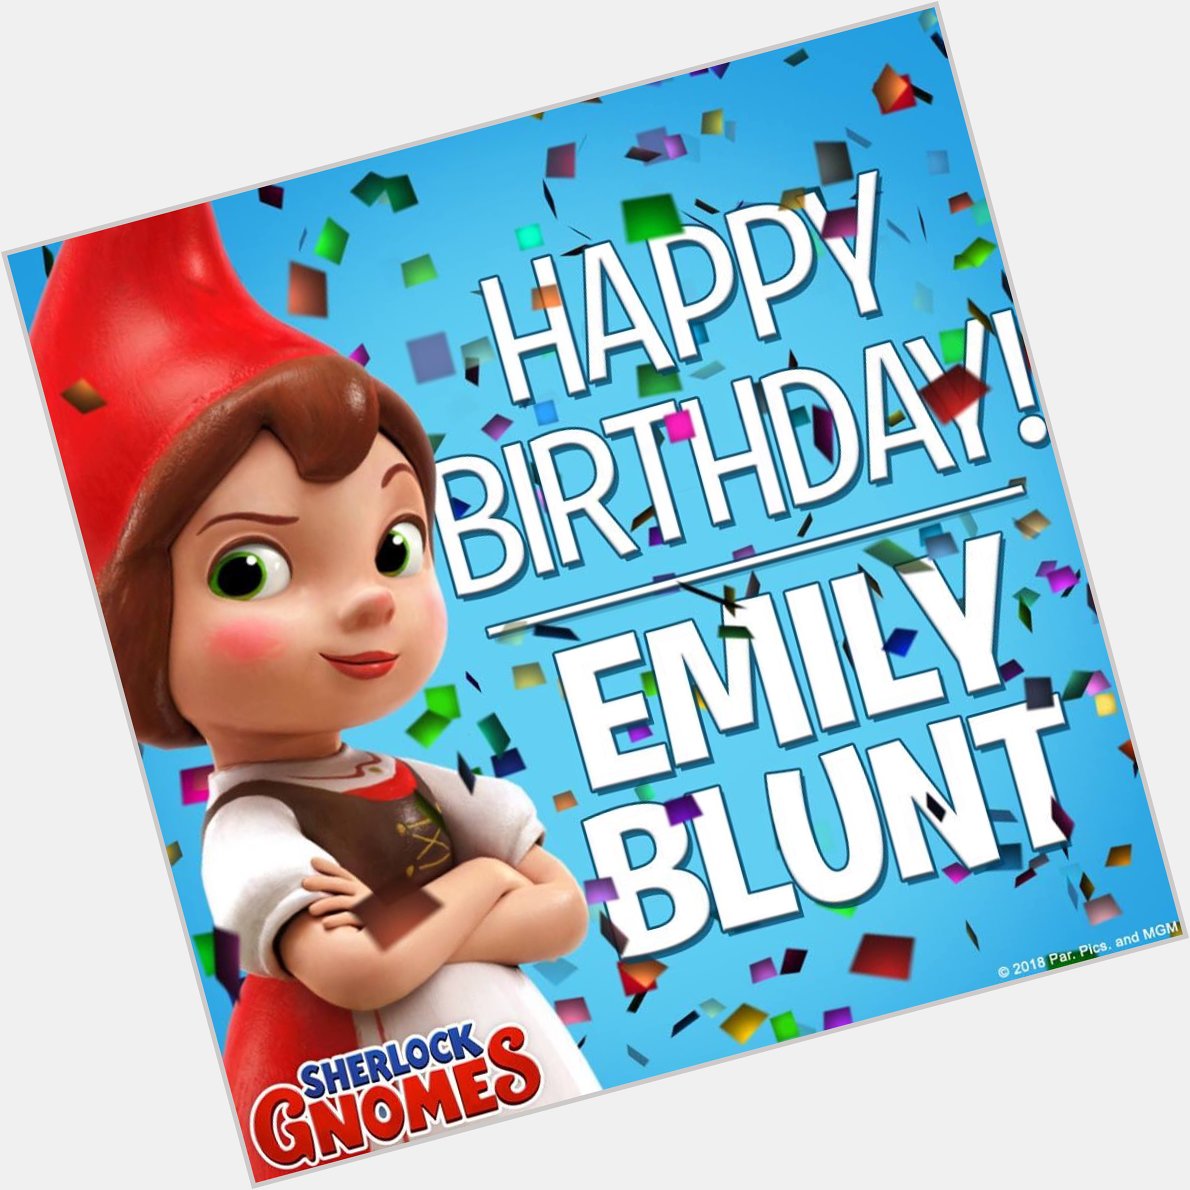 Happy birthday to our fair Juliet, Emily Blunt!  